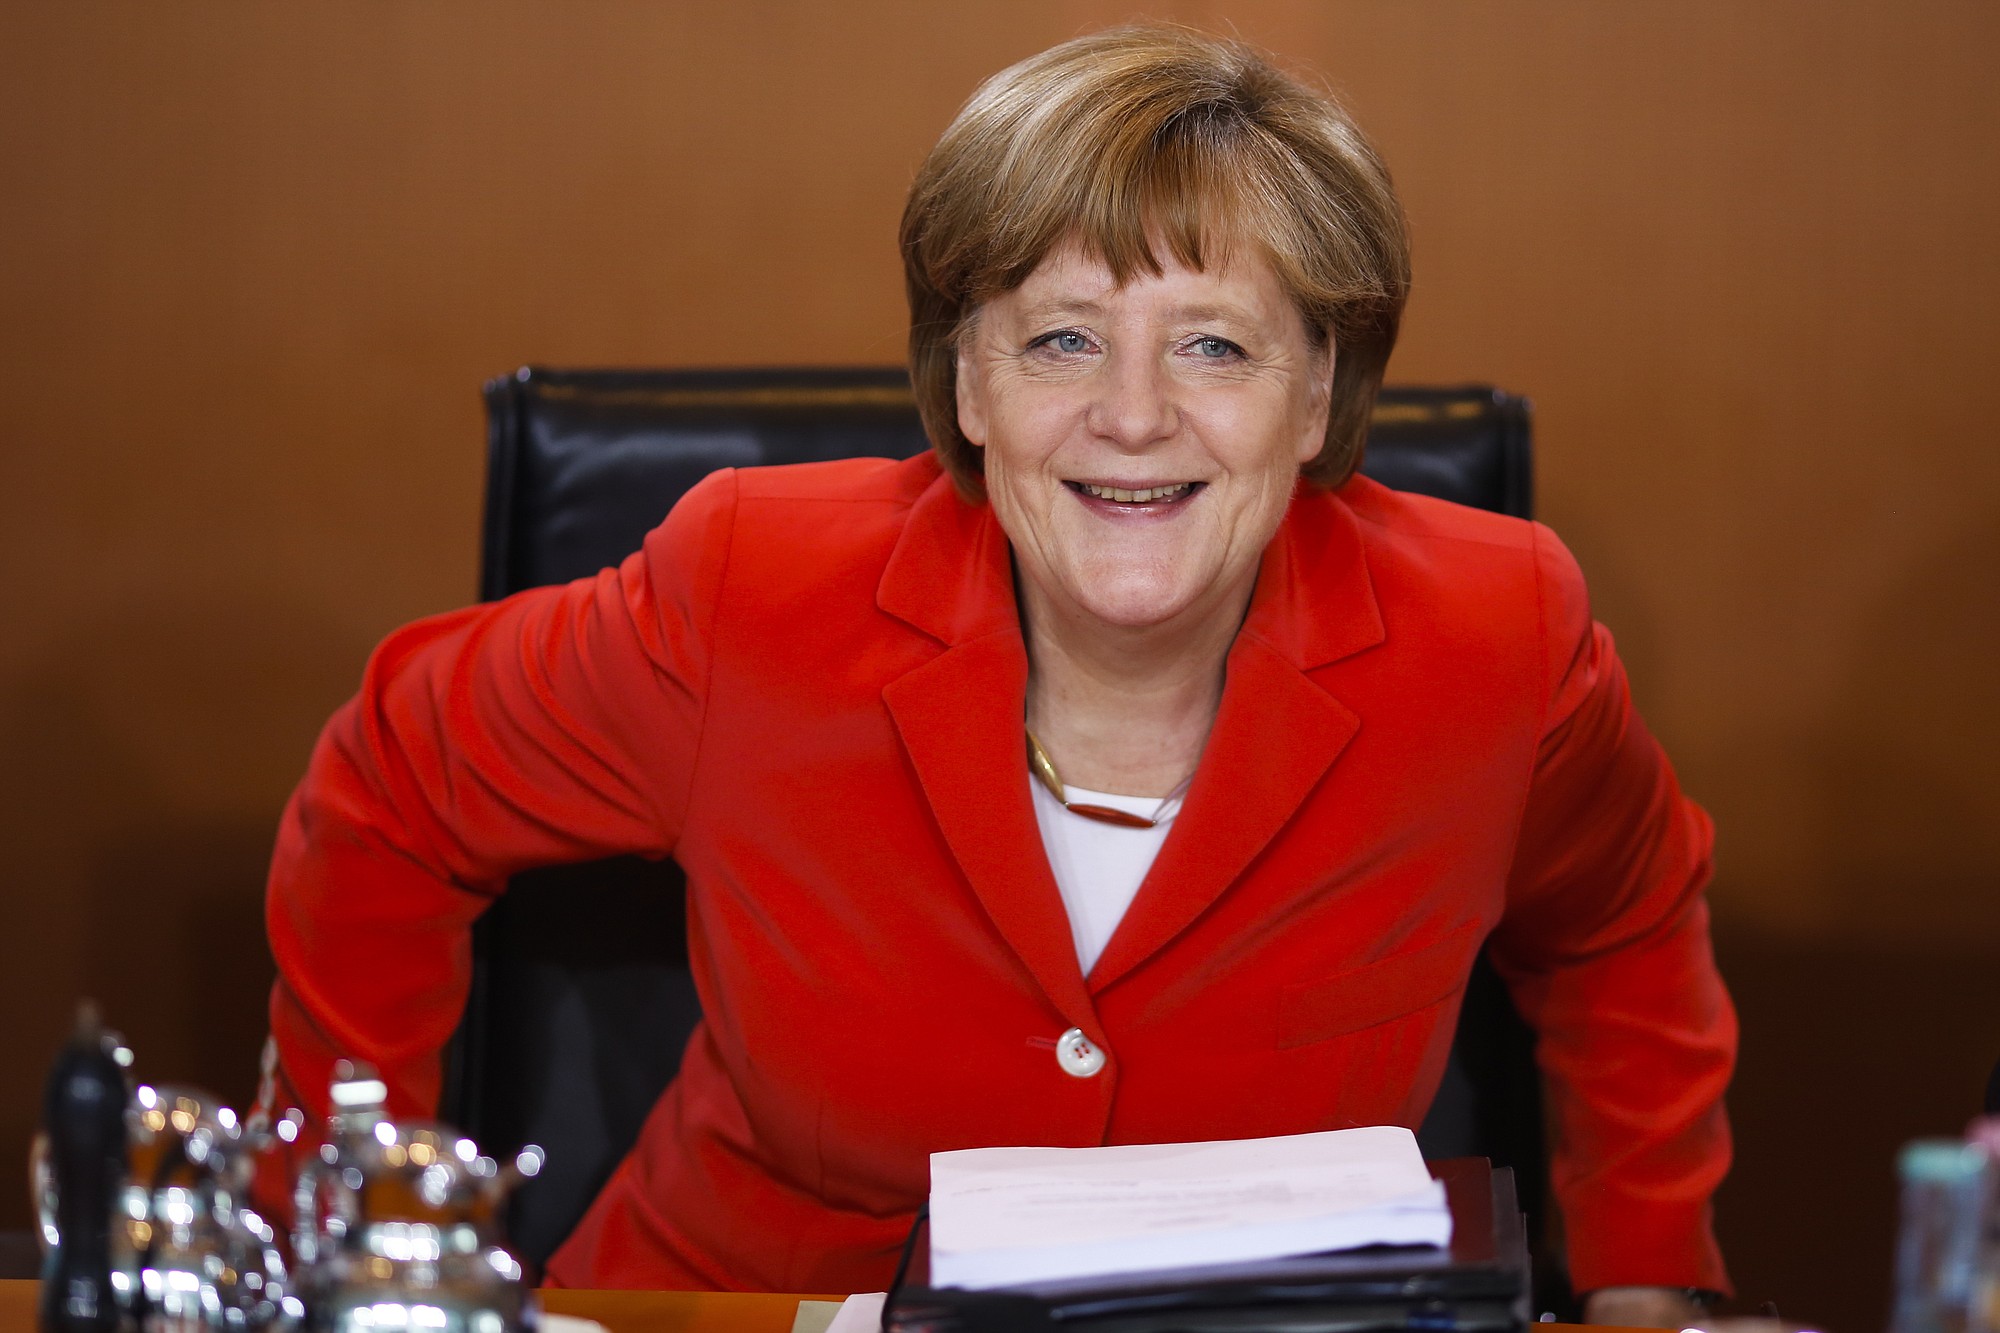 Angela Merkel
German chancellor